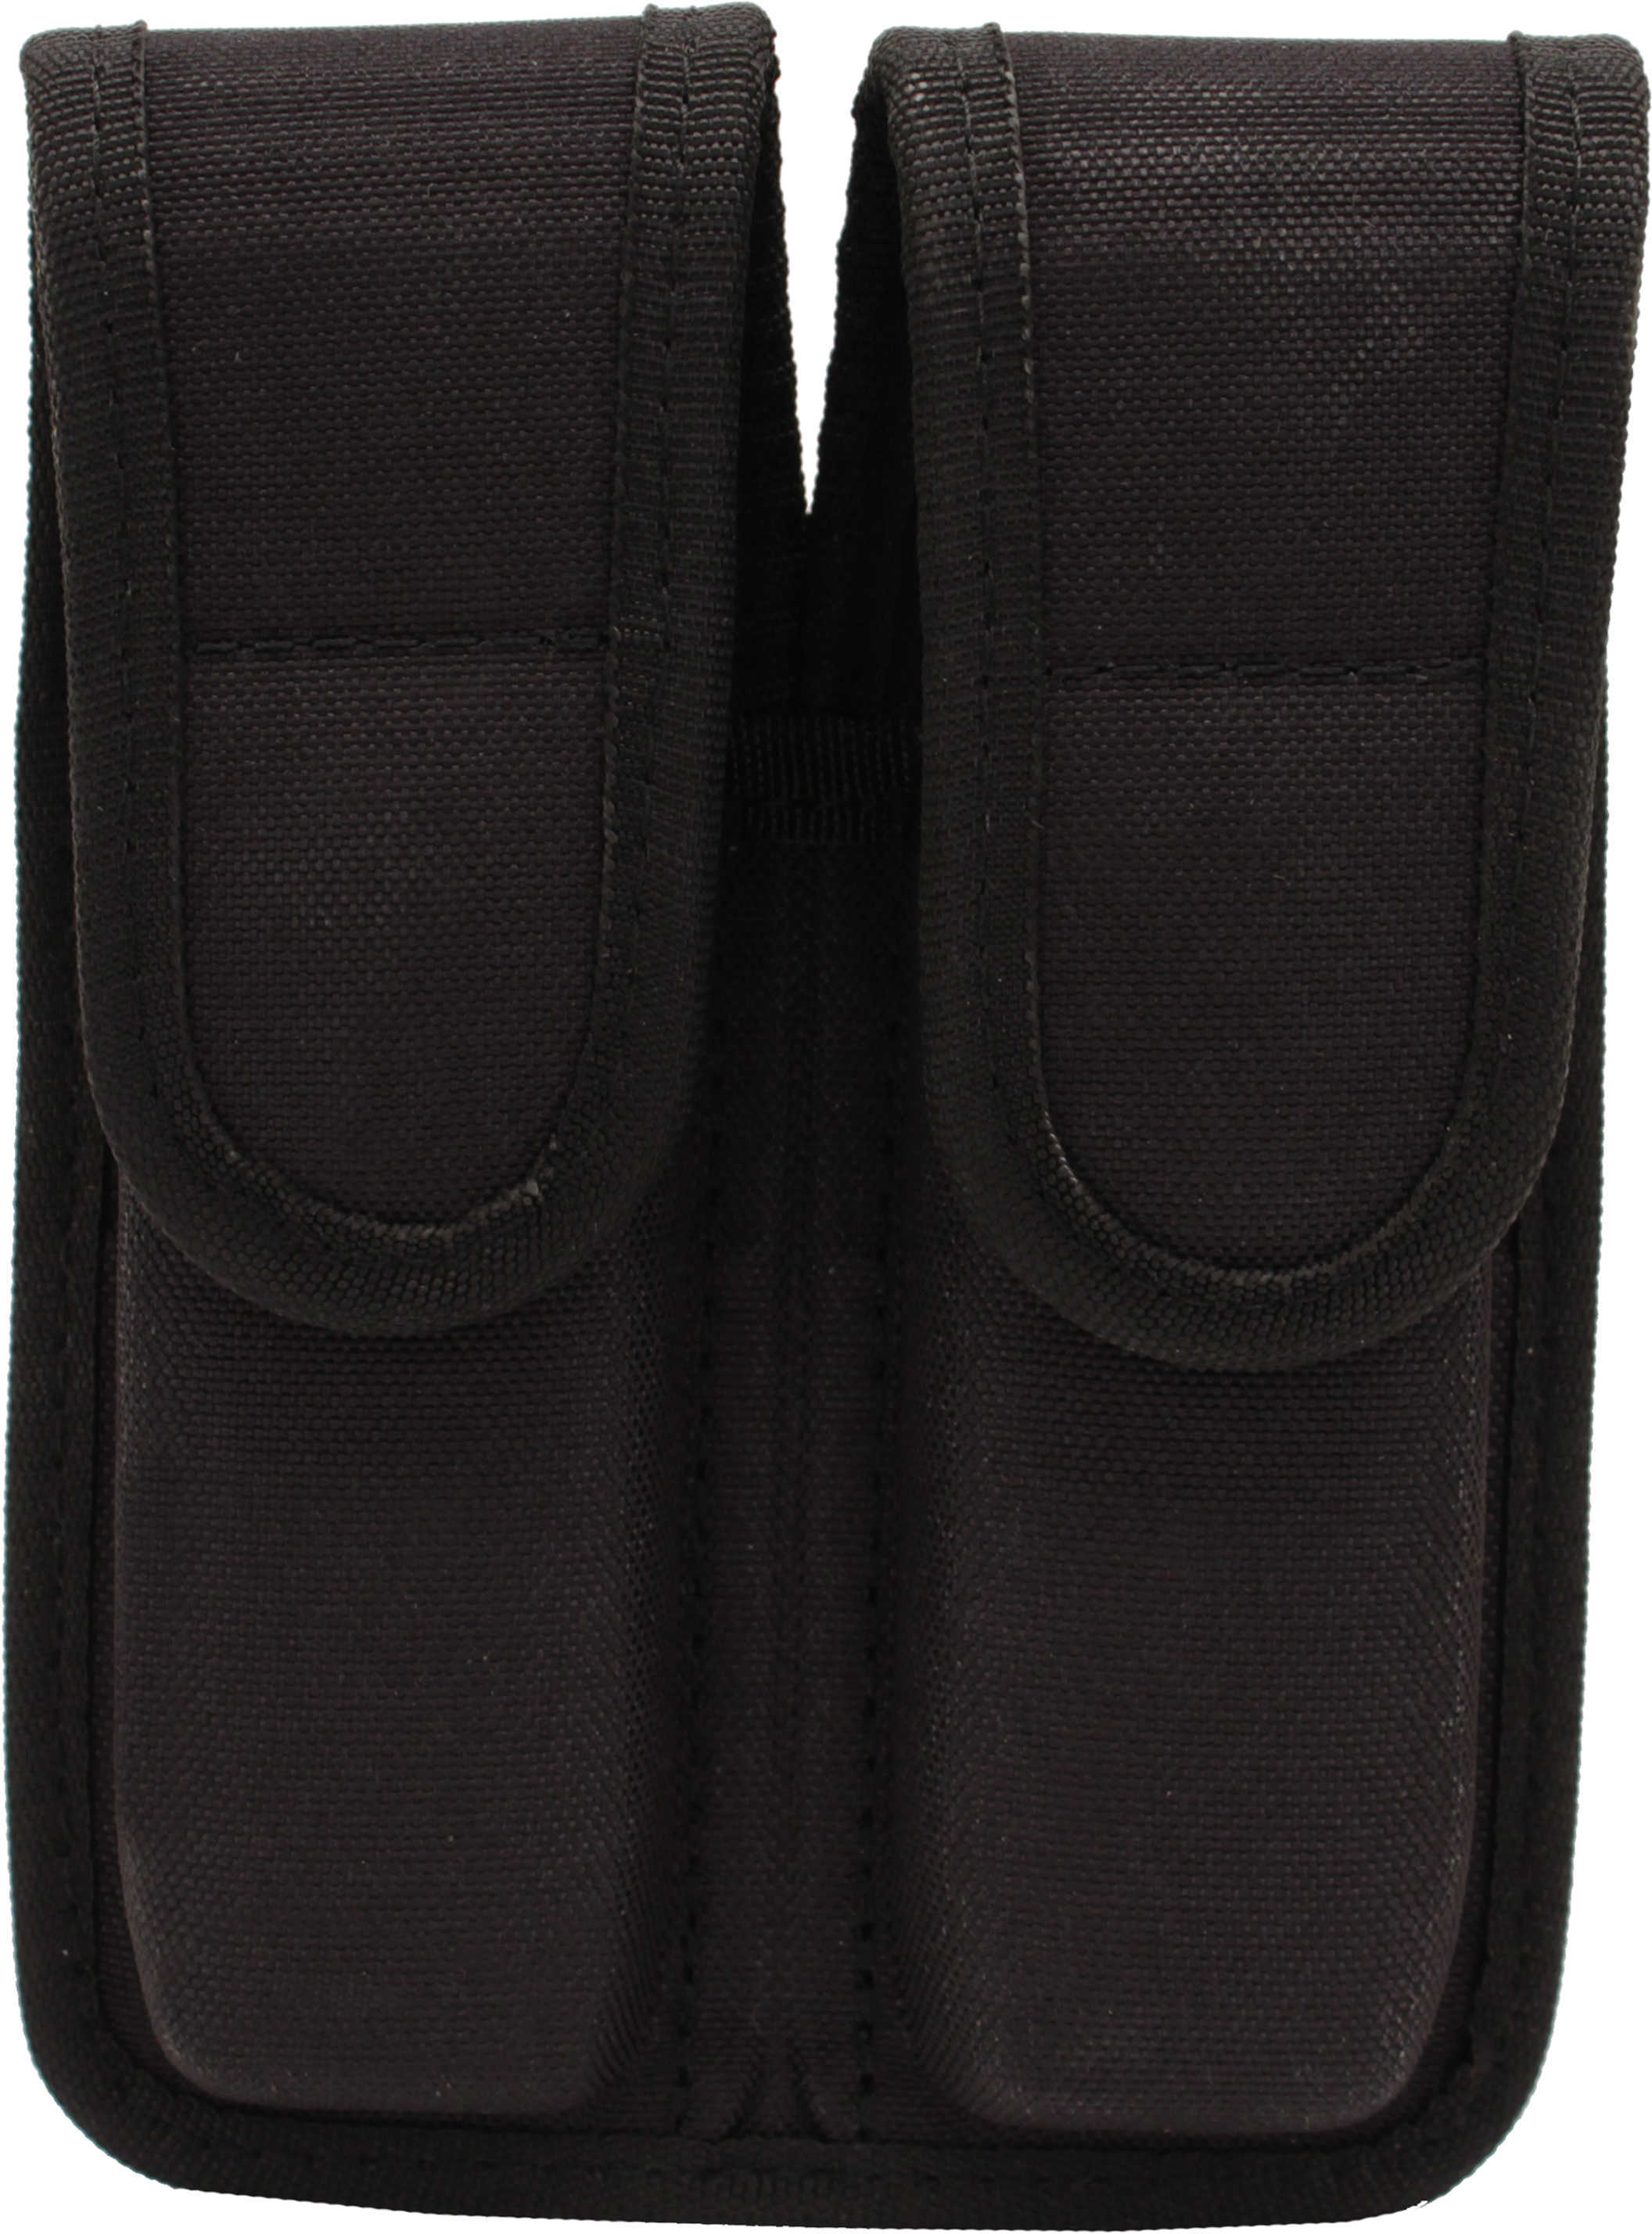 Bianchi 8002 Double Magazine Pouch Black, Size 01 31301